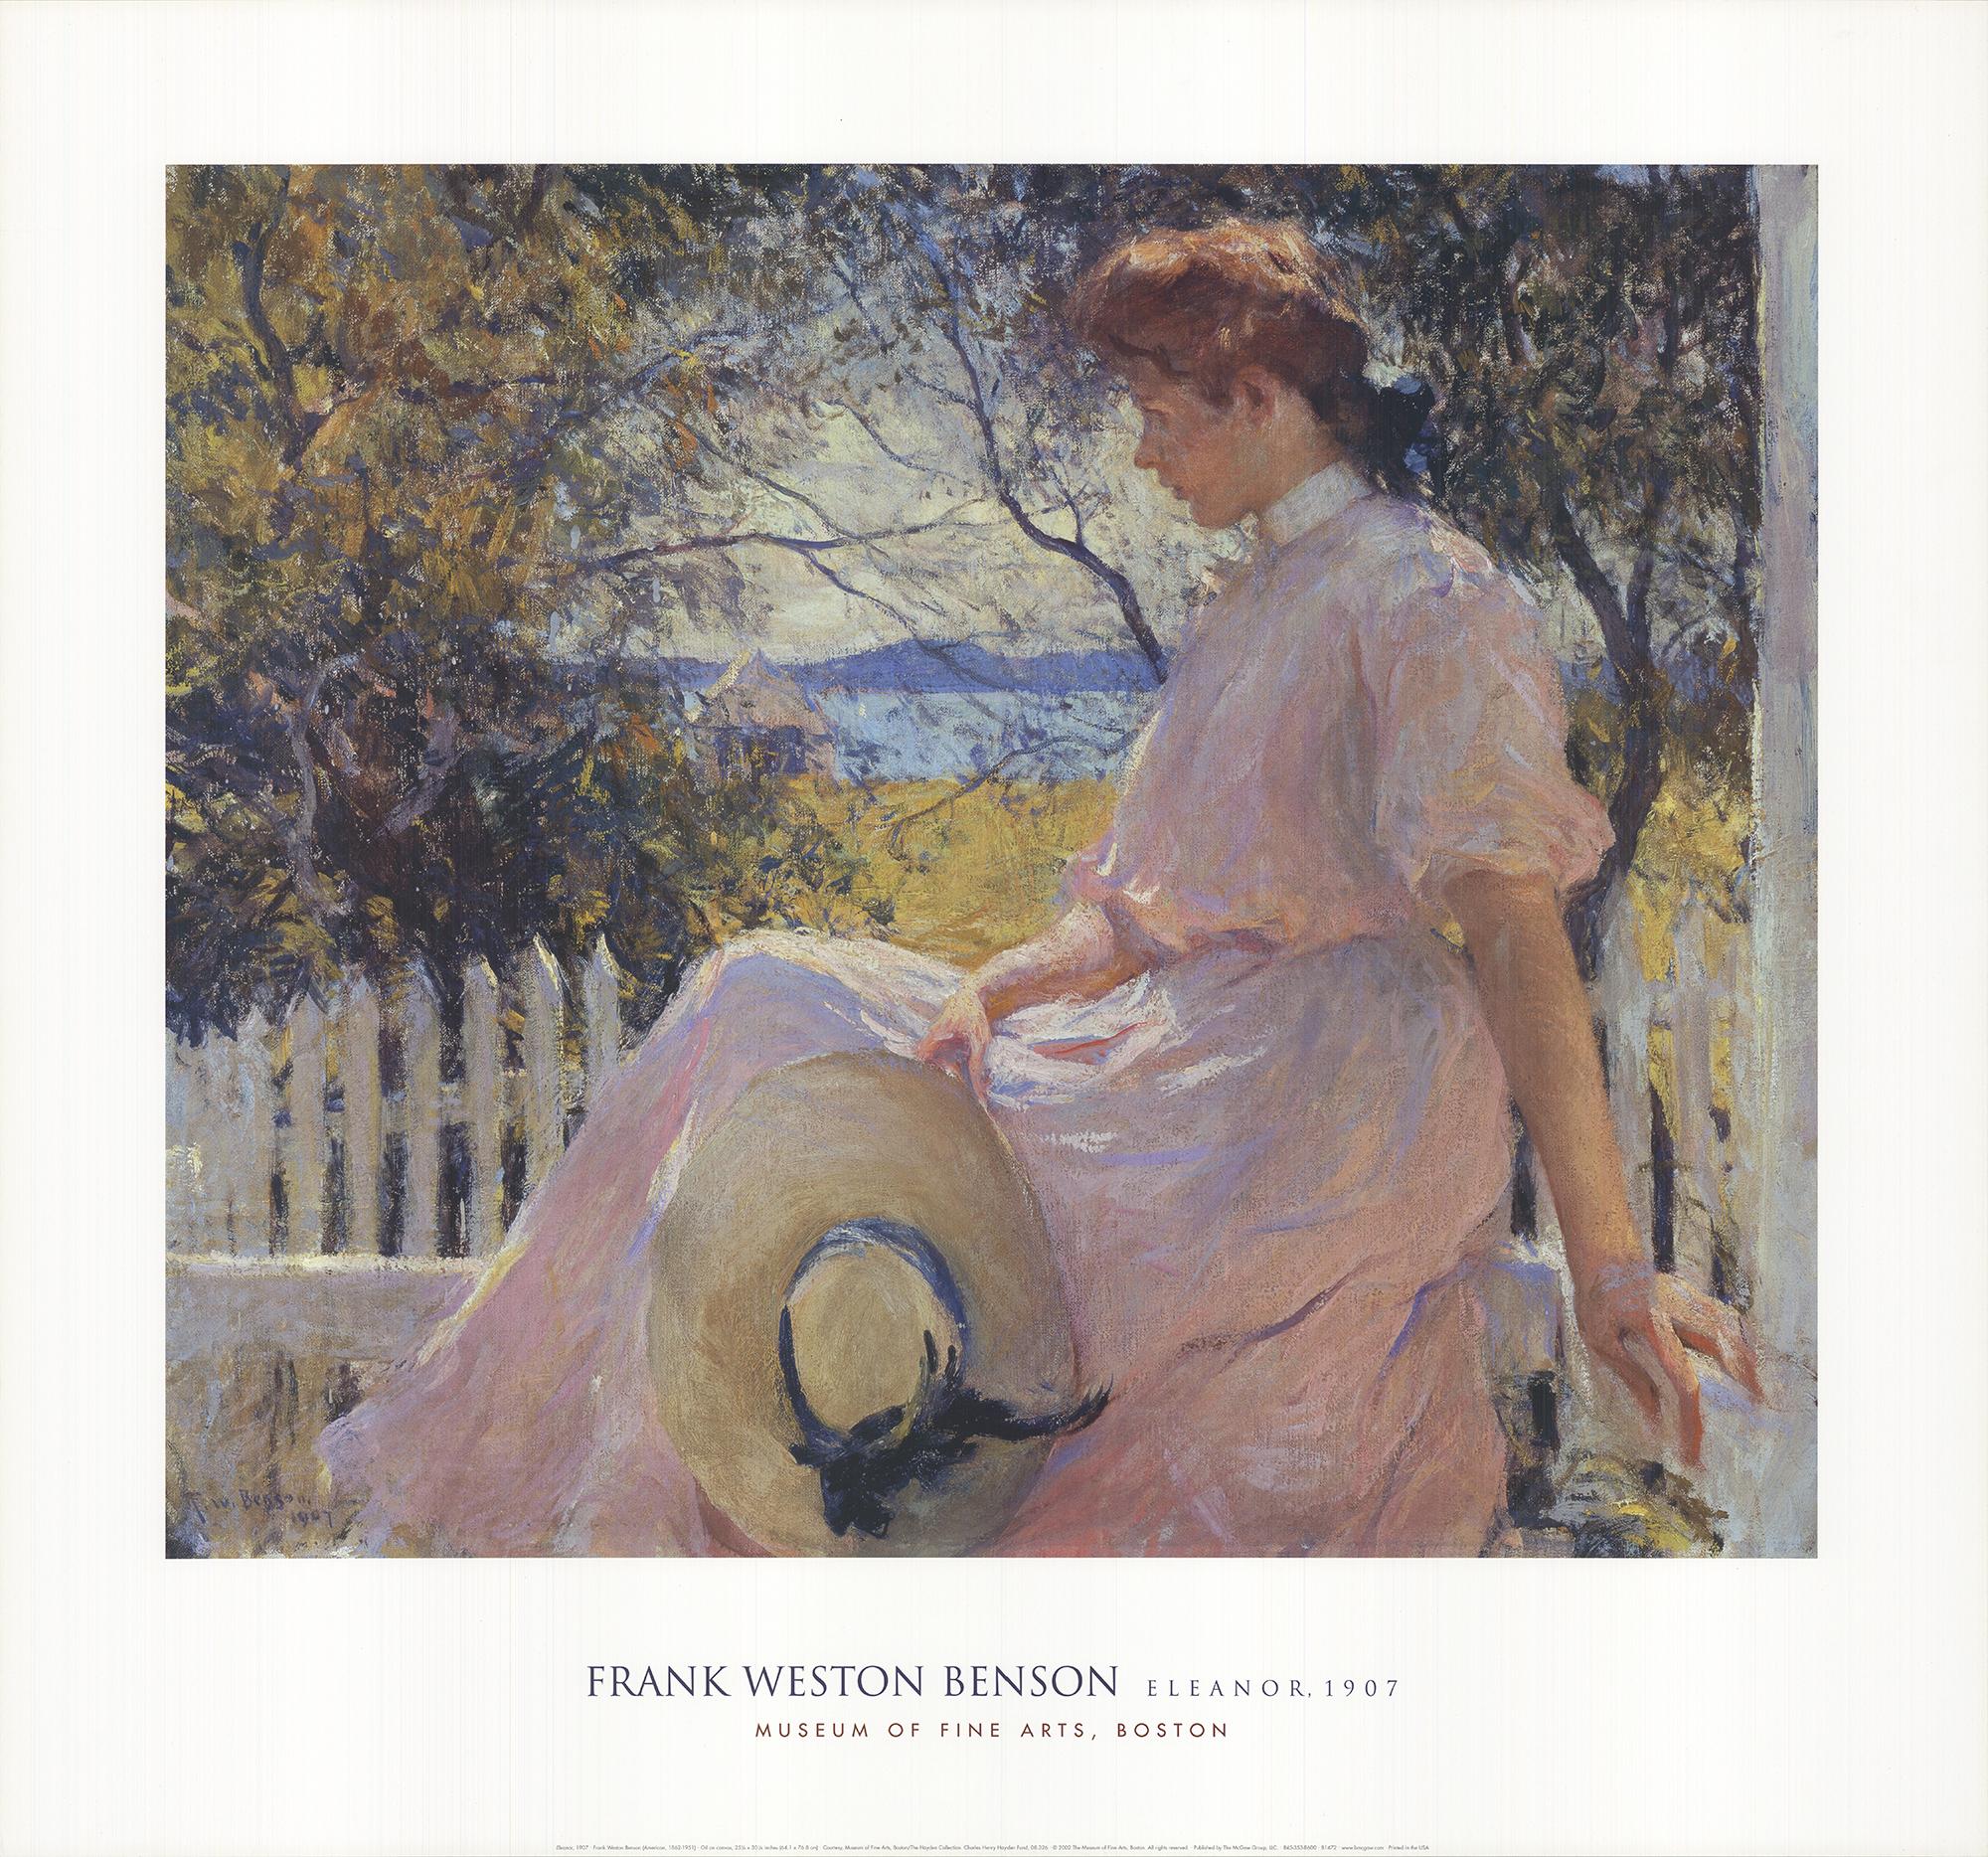 After FRANK WESTON BENSON Eleanor 28" x 30" Poster - 2002 Impressionism Pink